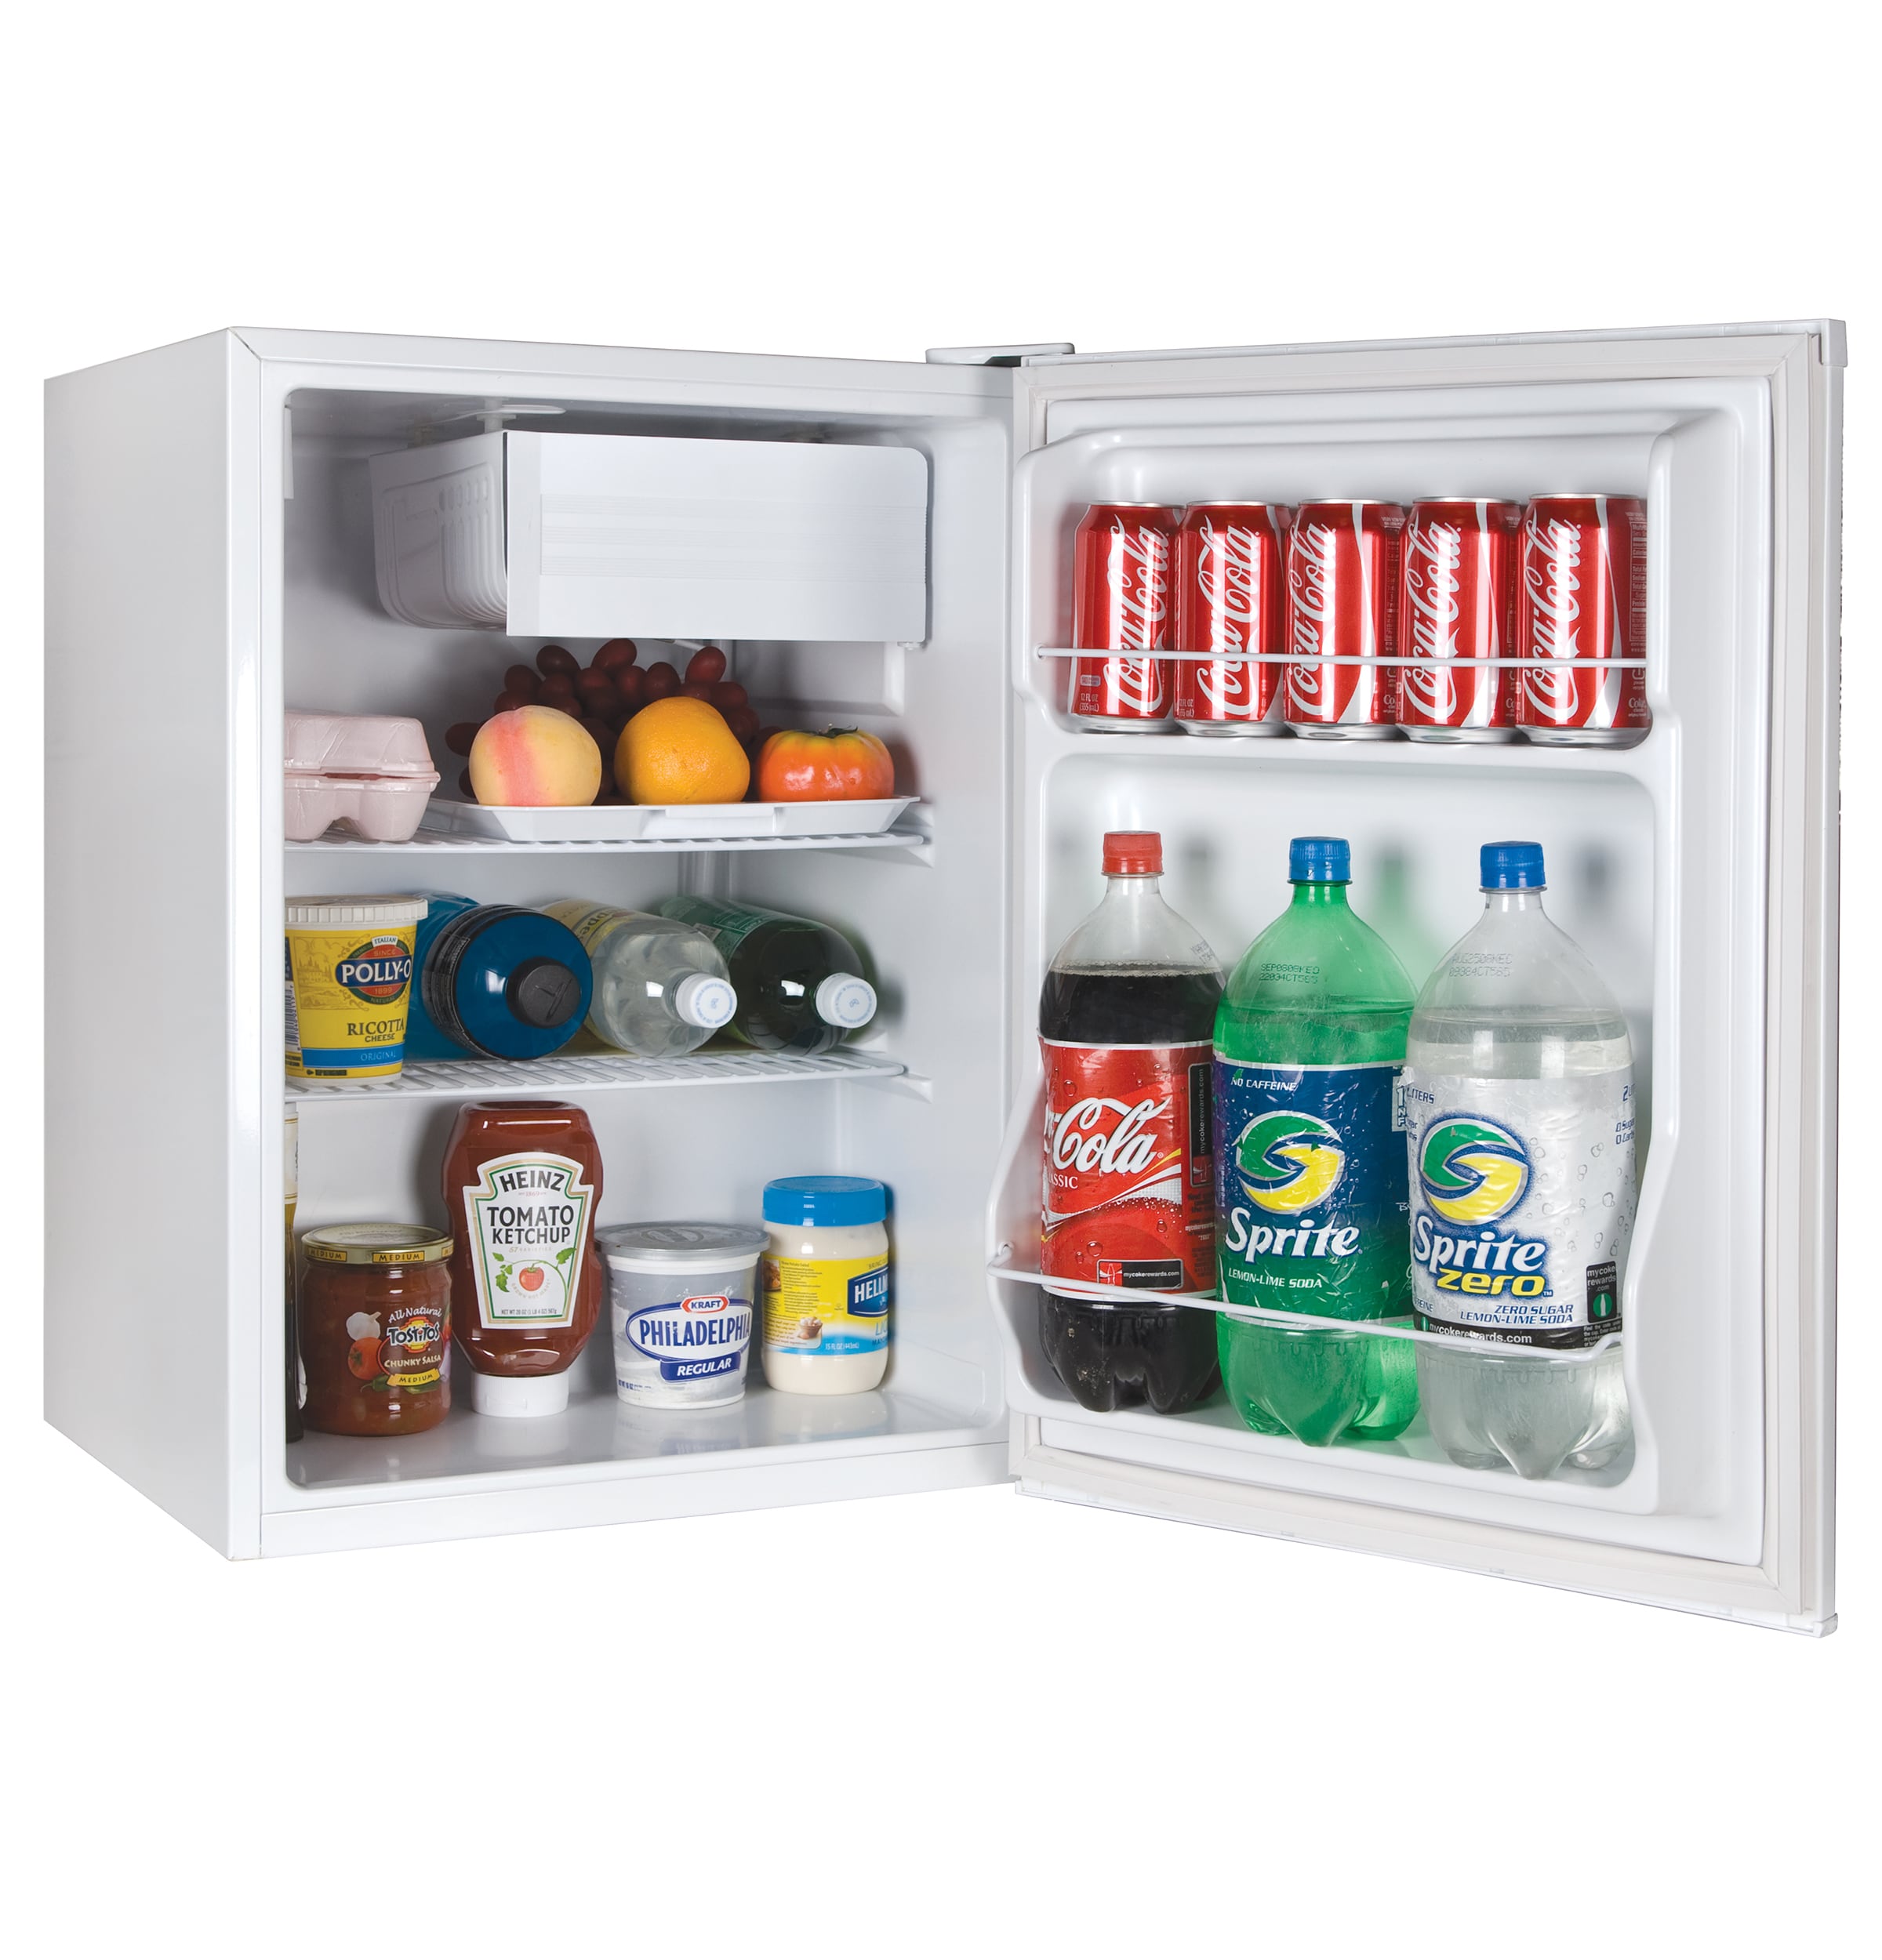 Haier 2.7-cu ft Standard-depth Mini Fridge Freezer Compartment